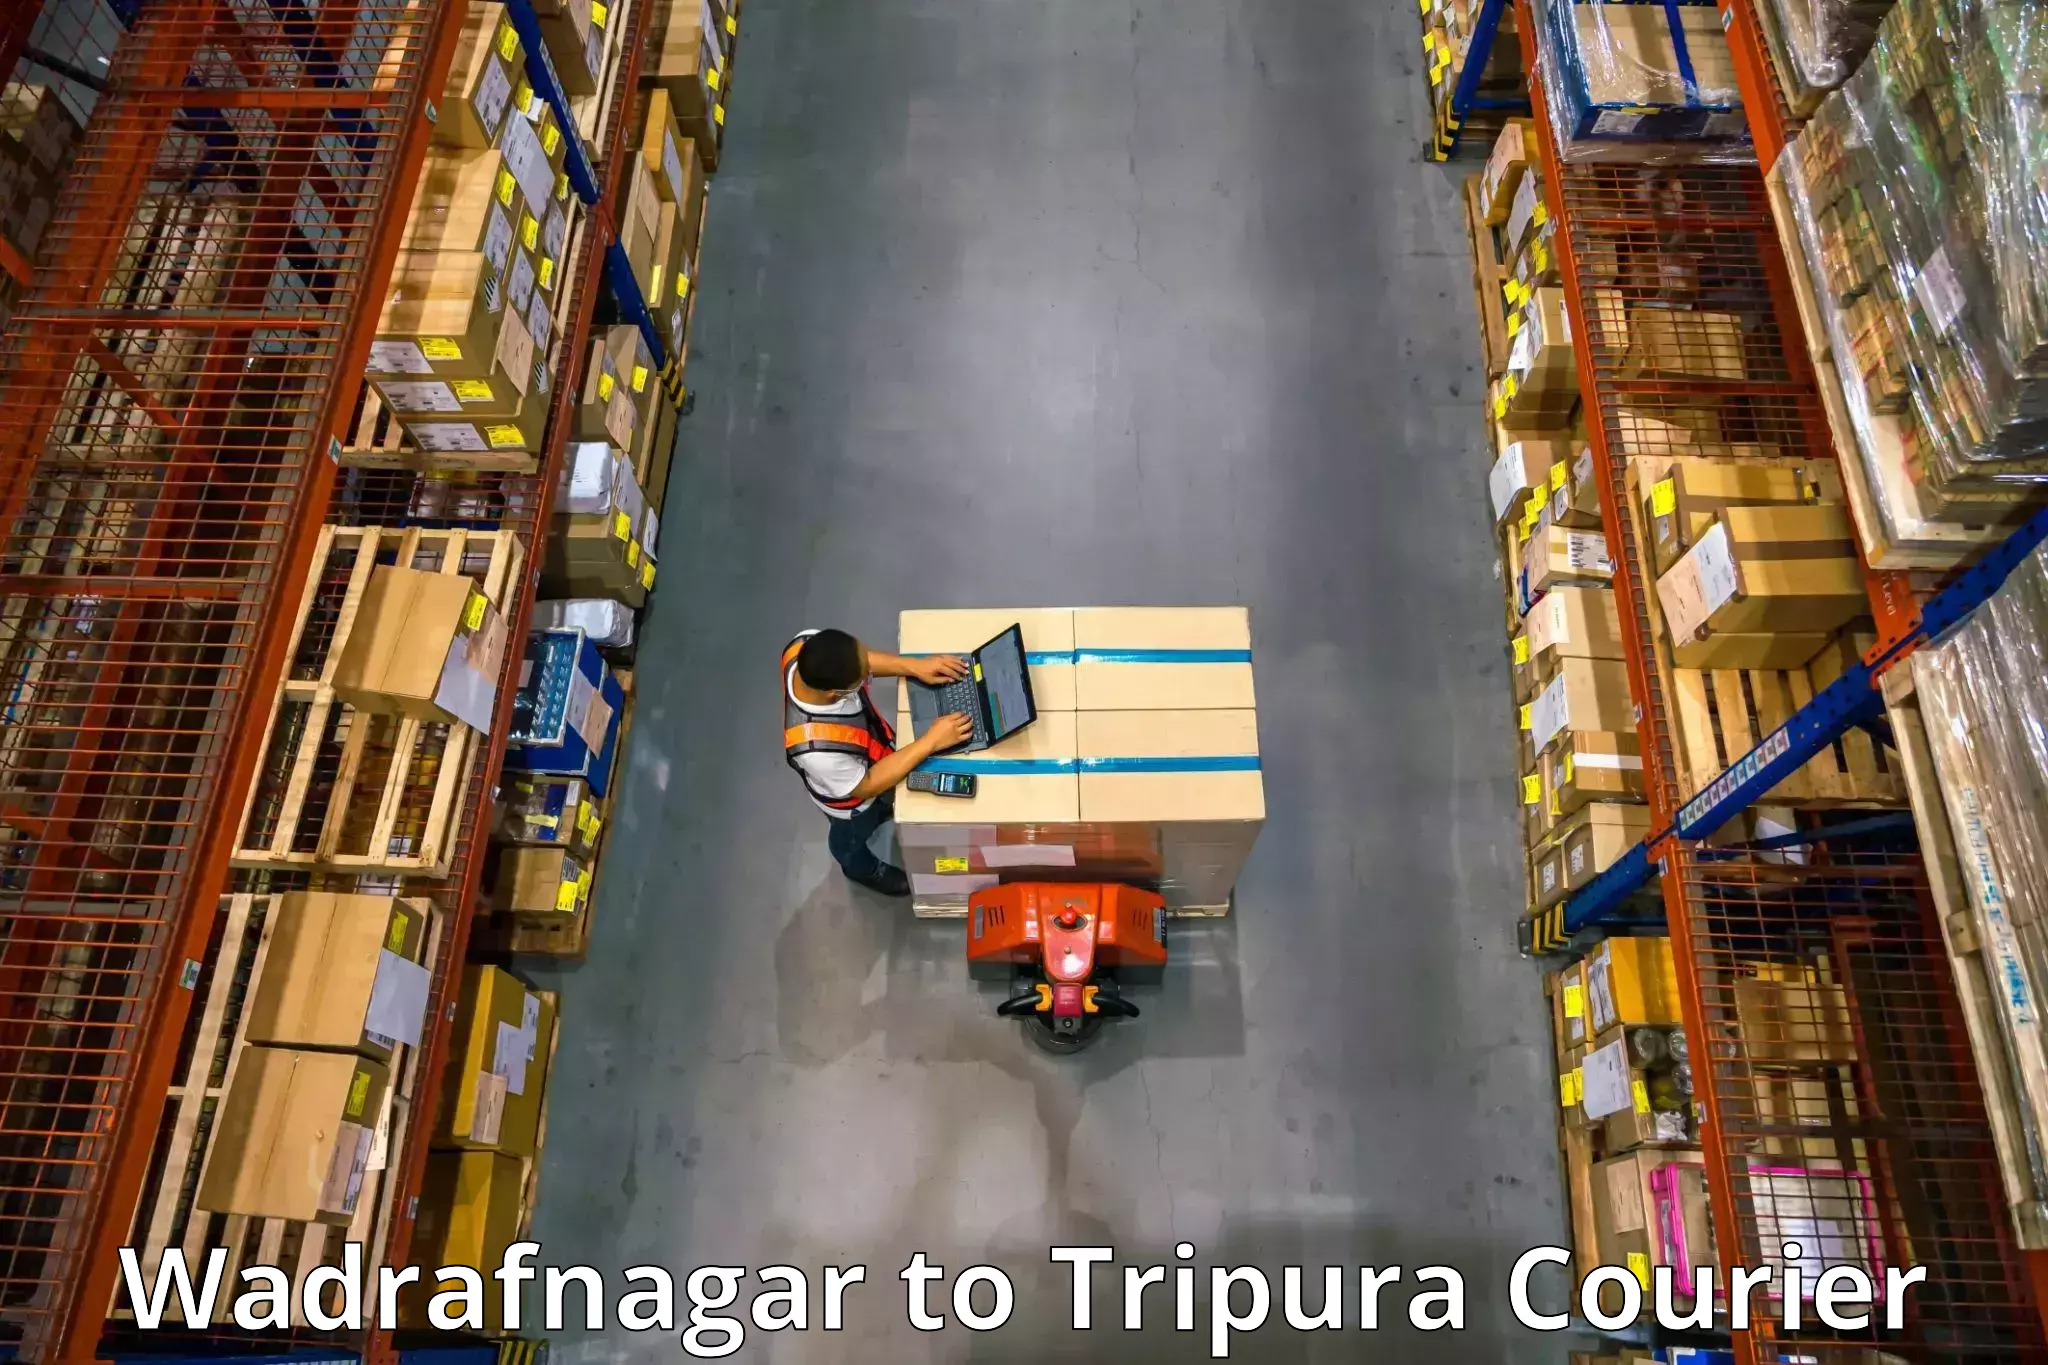 Trusted moving company Wadrafnagar to Amarpur